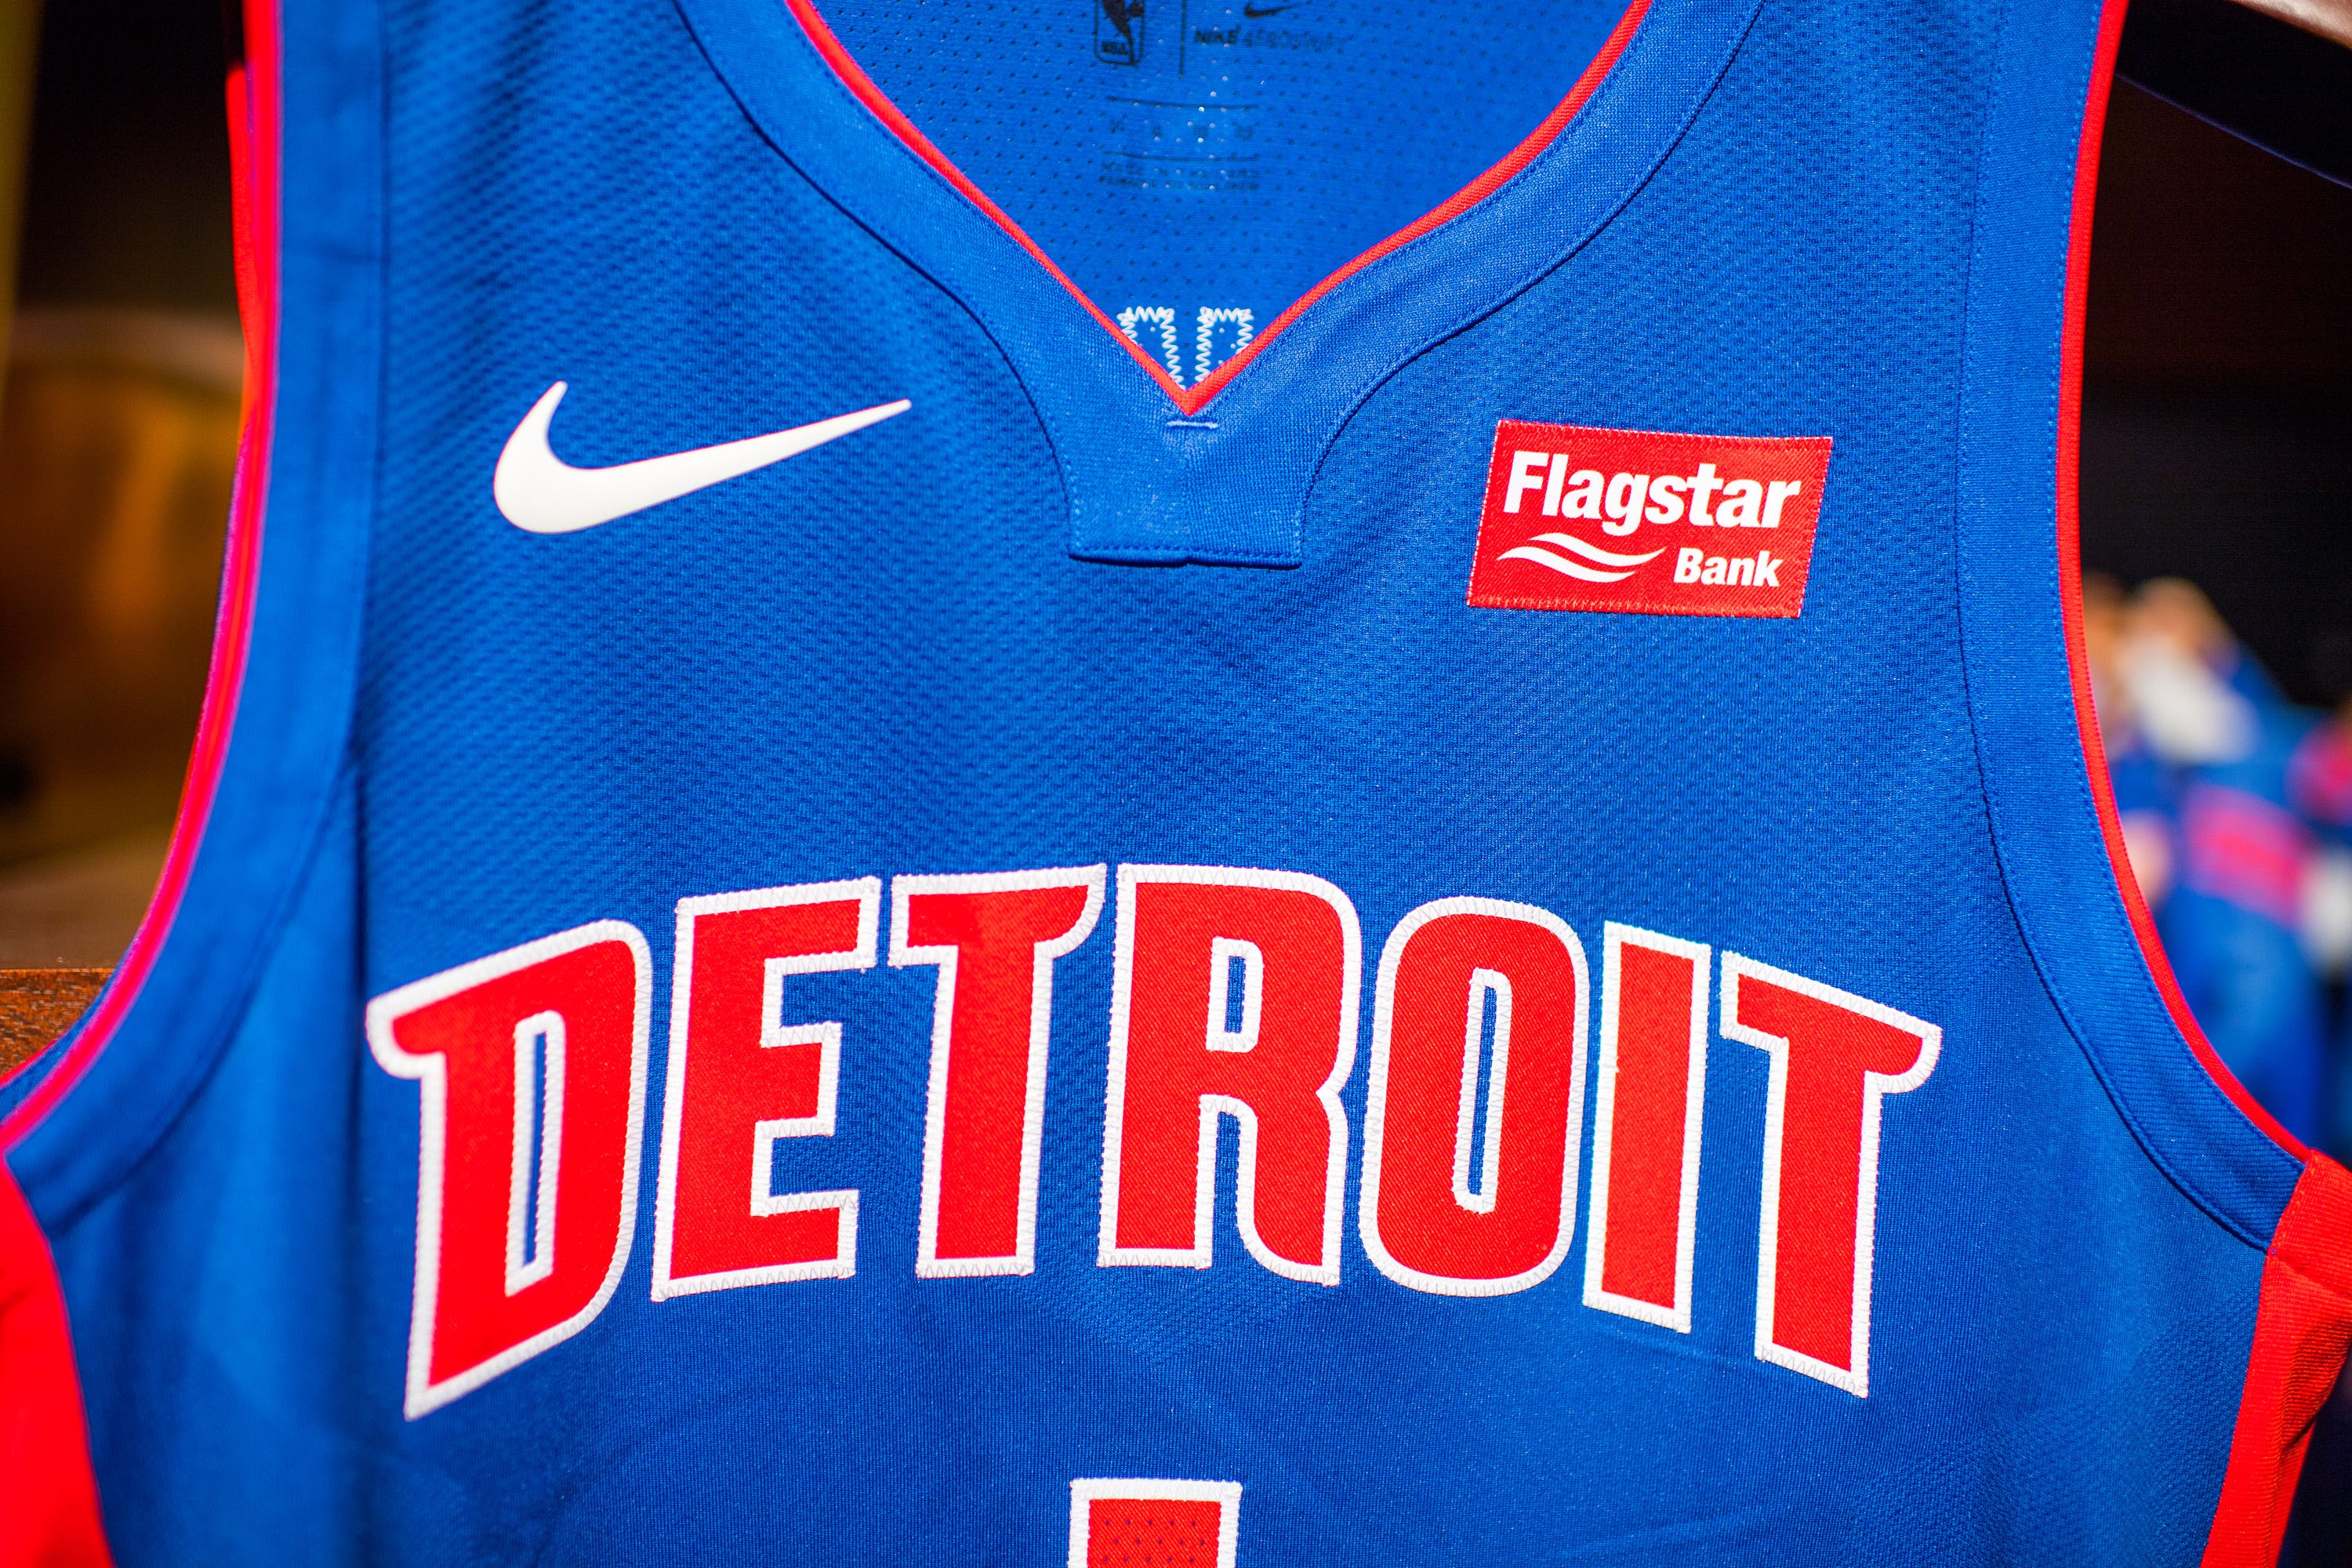 Detroit Pistons will add Flagstar Bank 